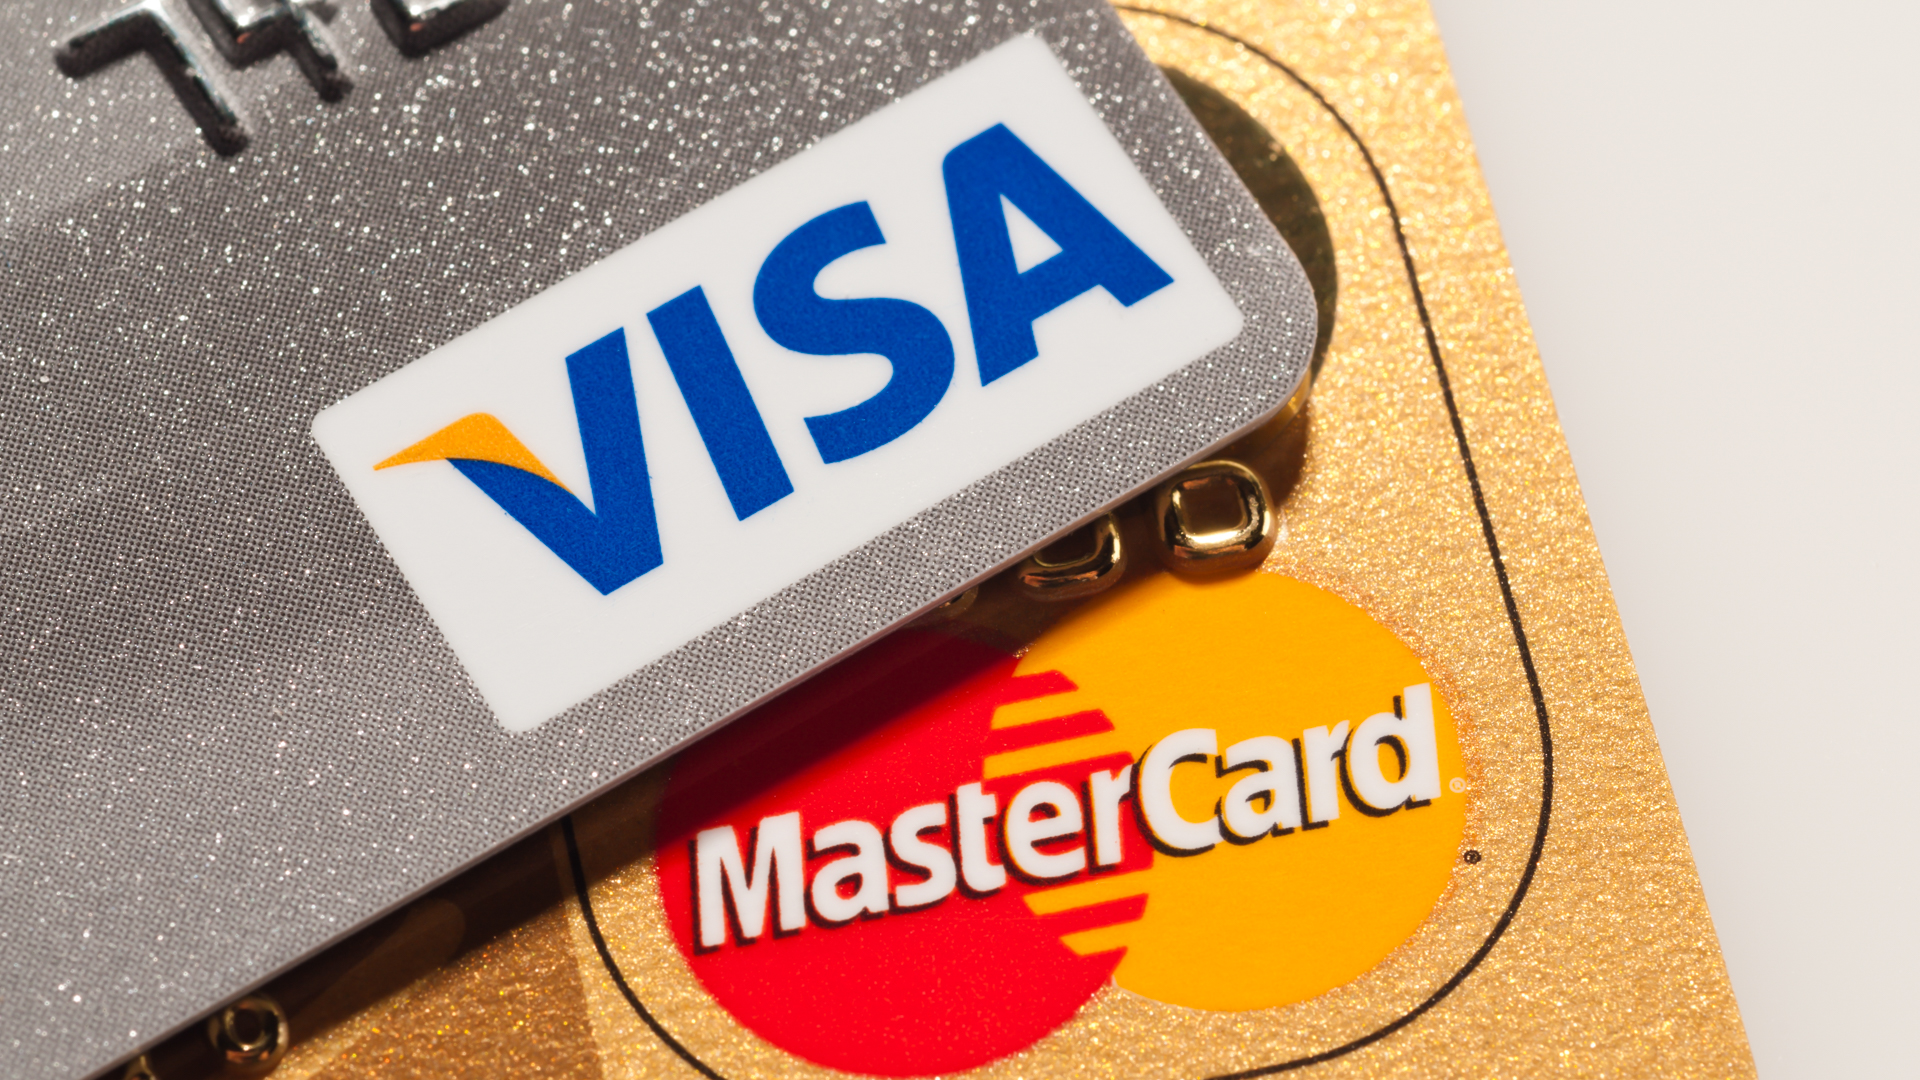 Visa And Mastercard Credit Cards IStock 458551149 